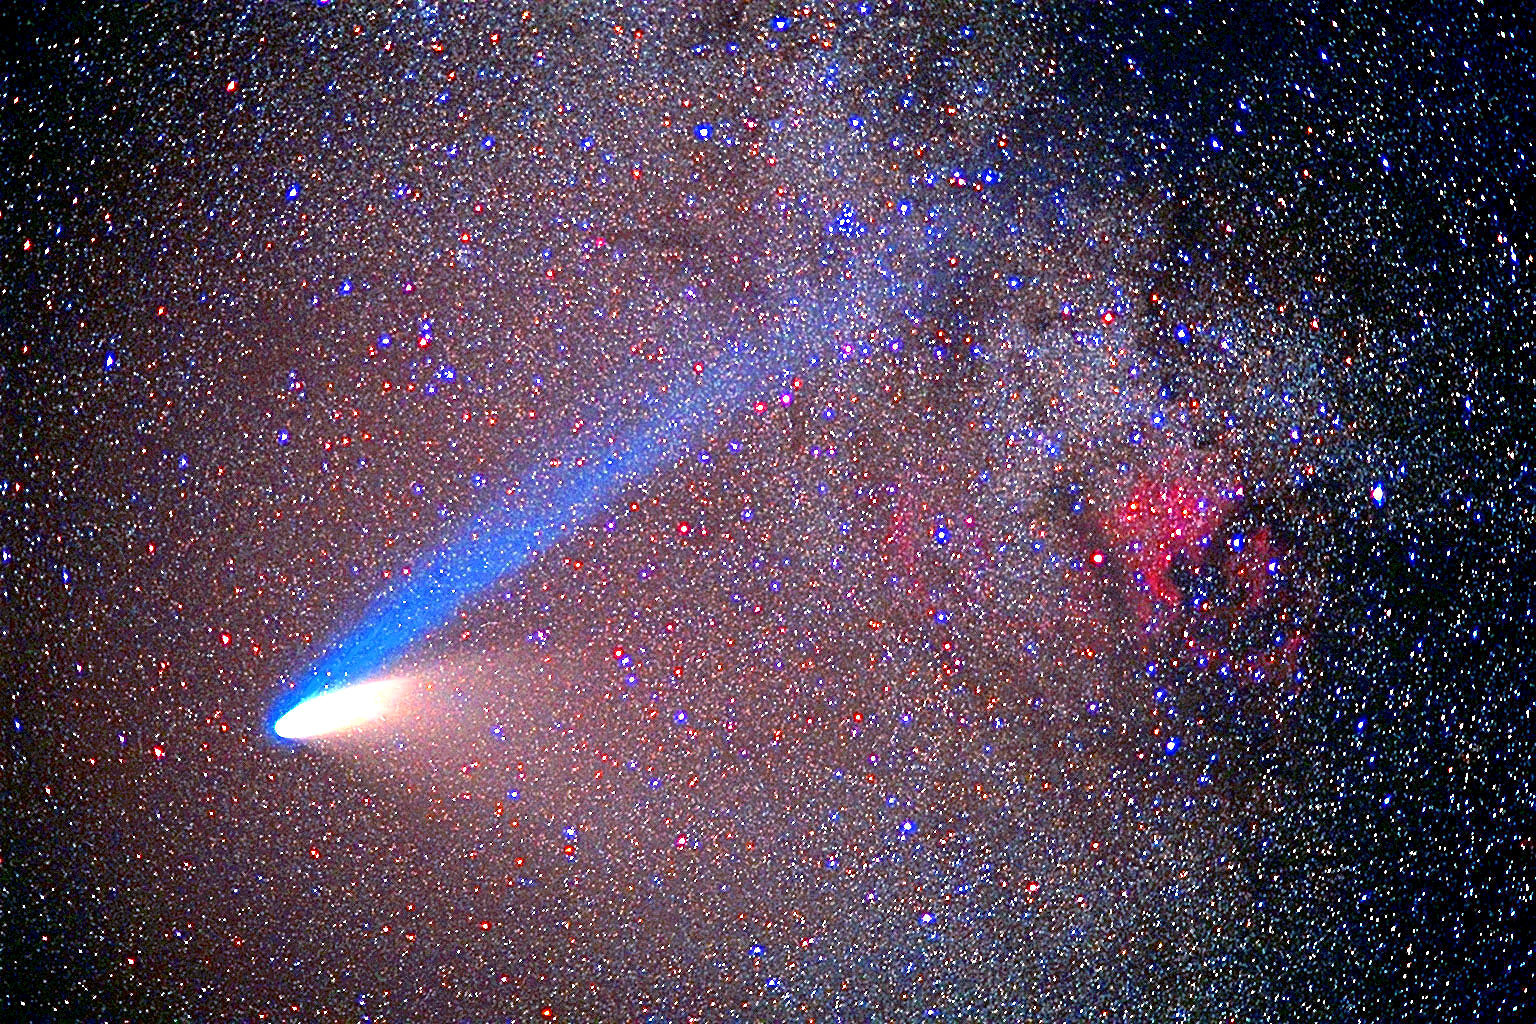 Comet Hale Bopp and the North America Nebula